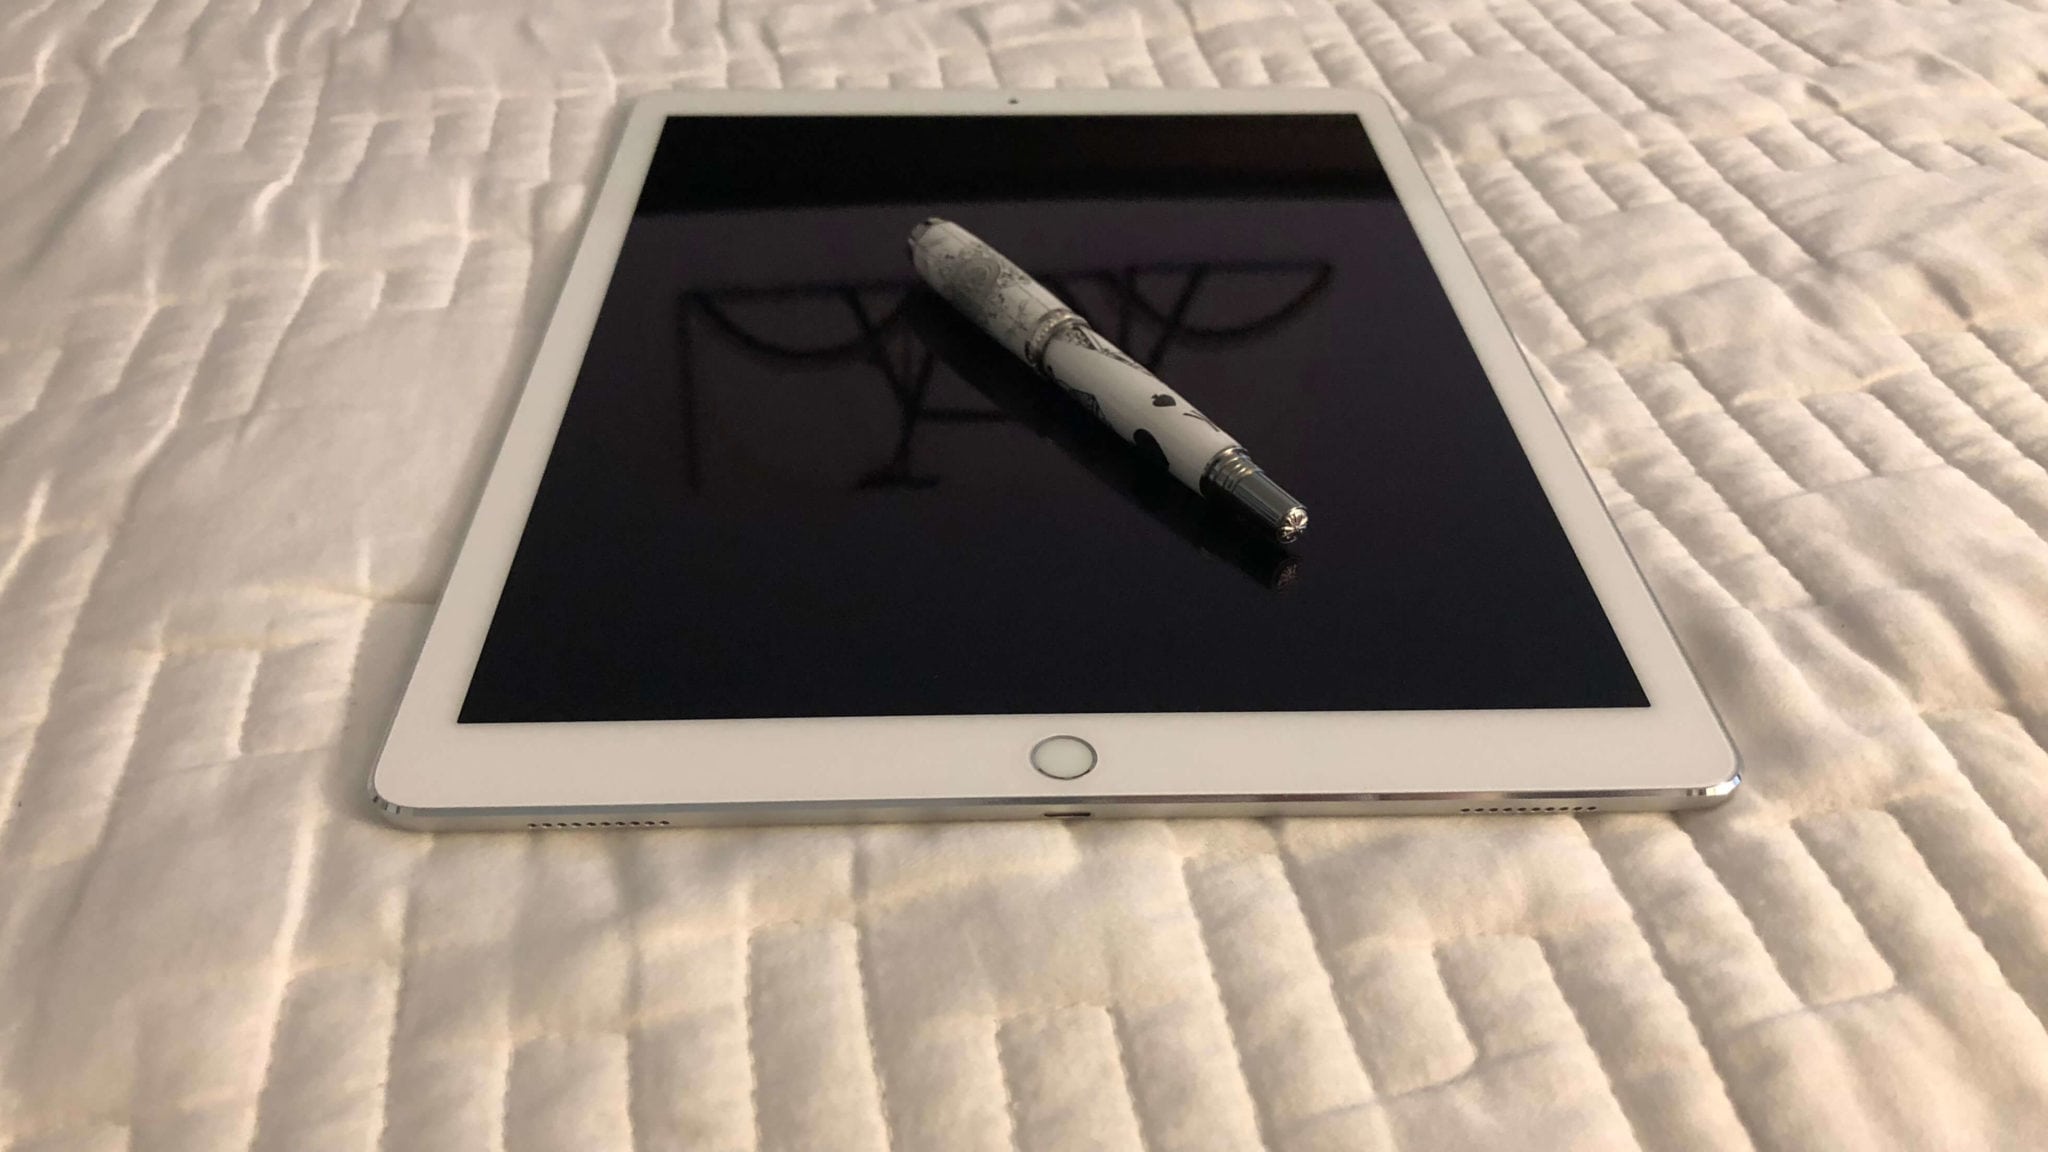 Pen on iPad on bed